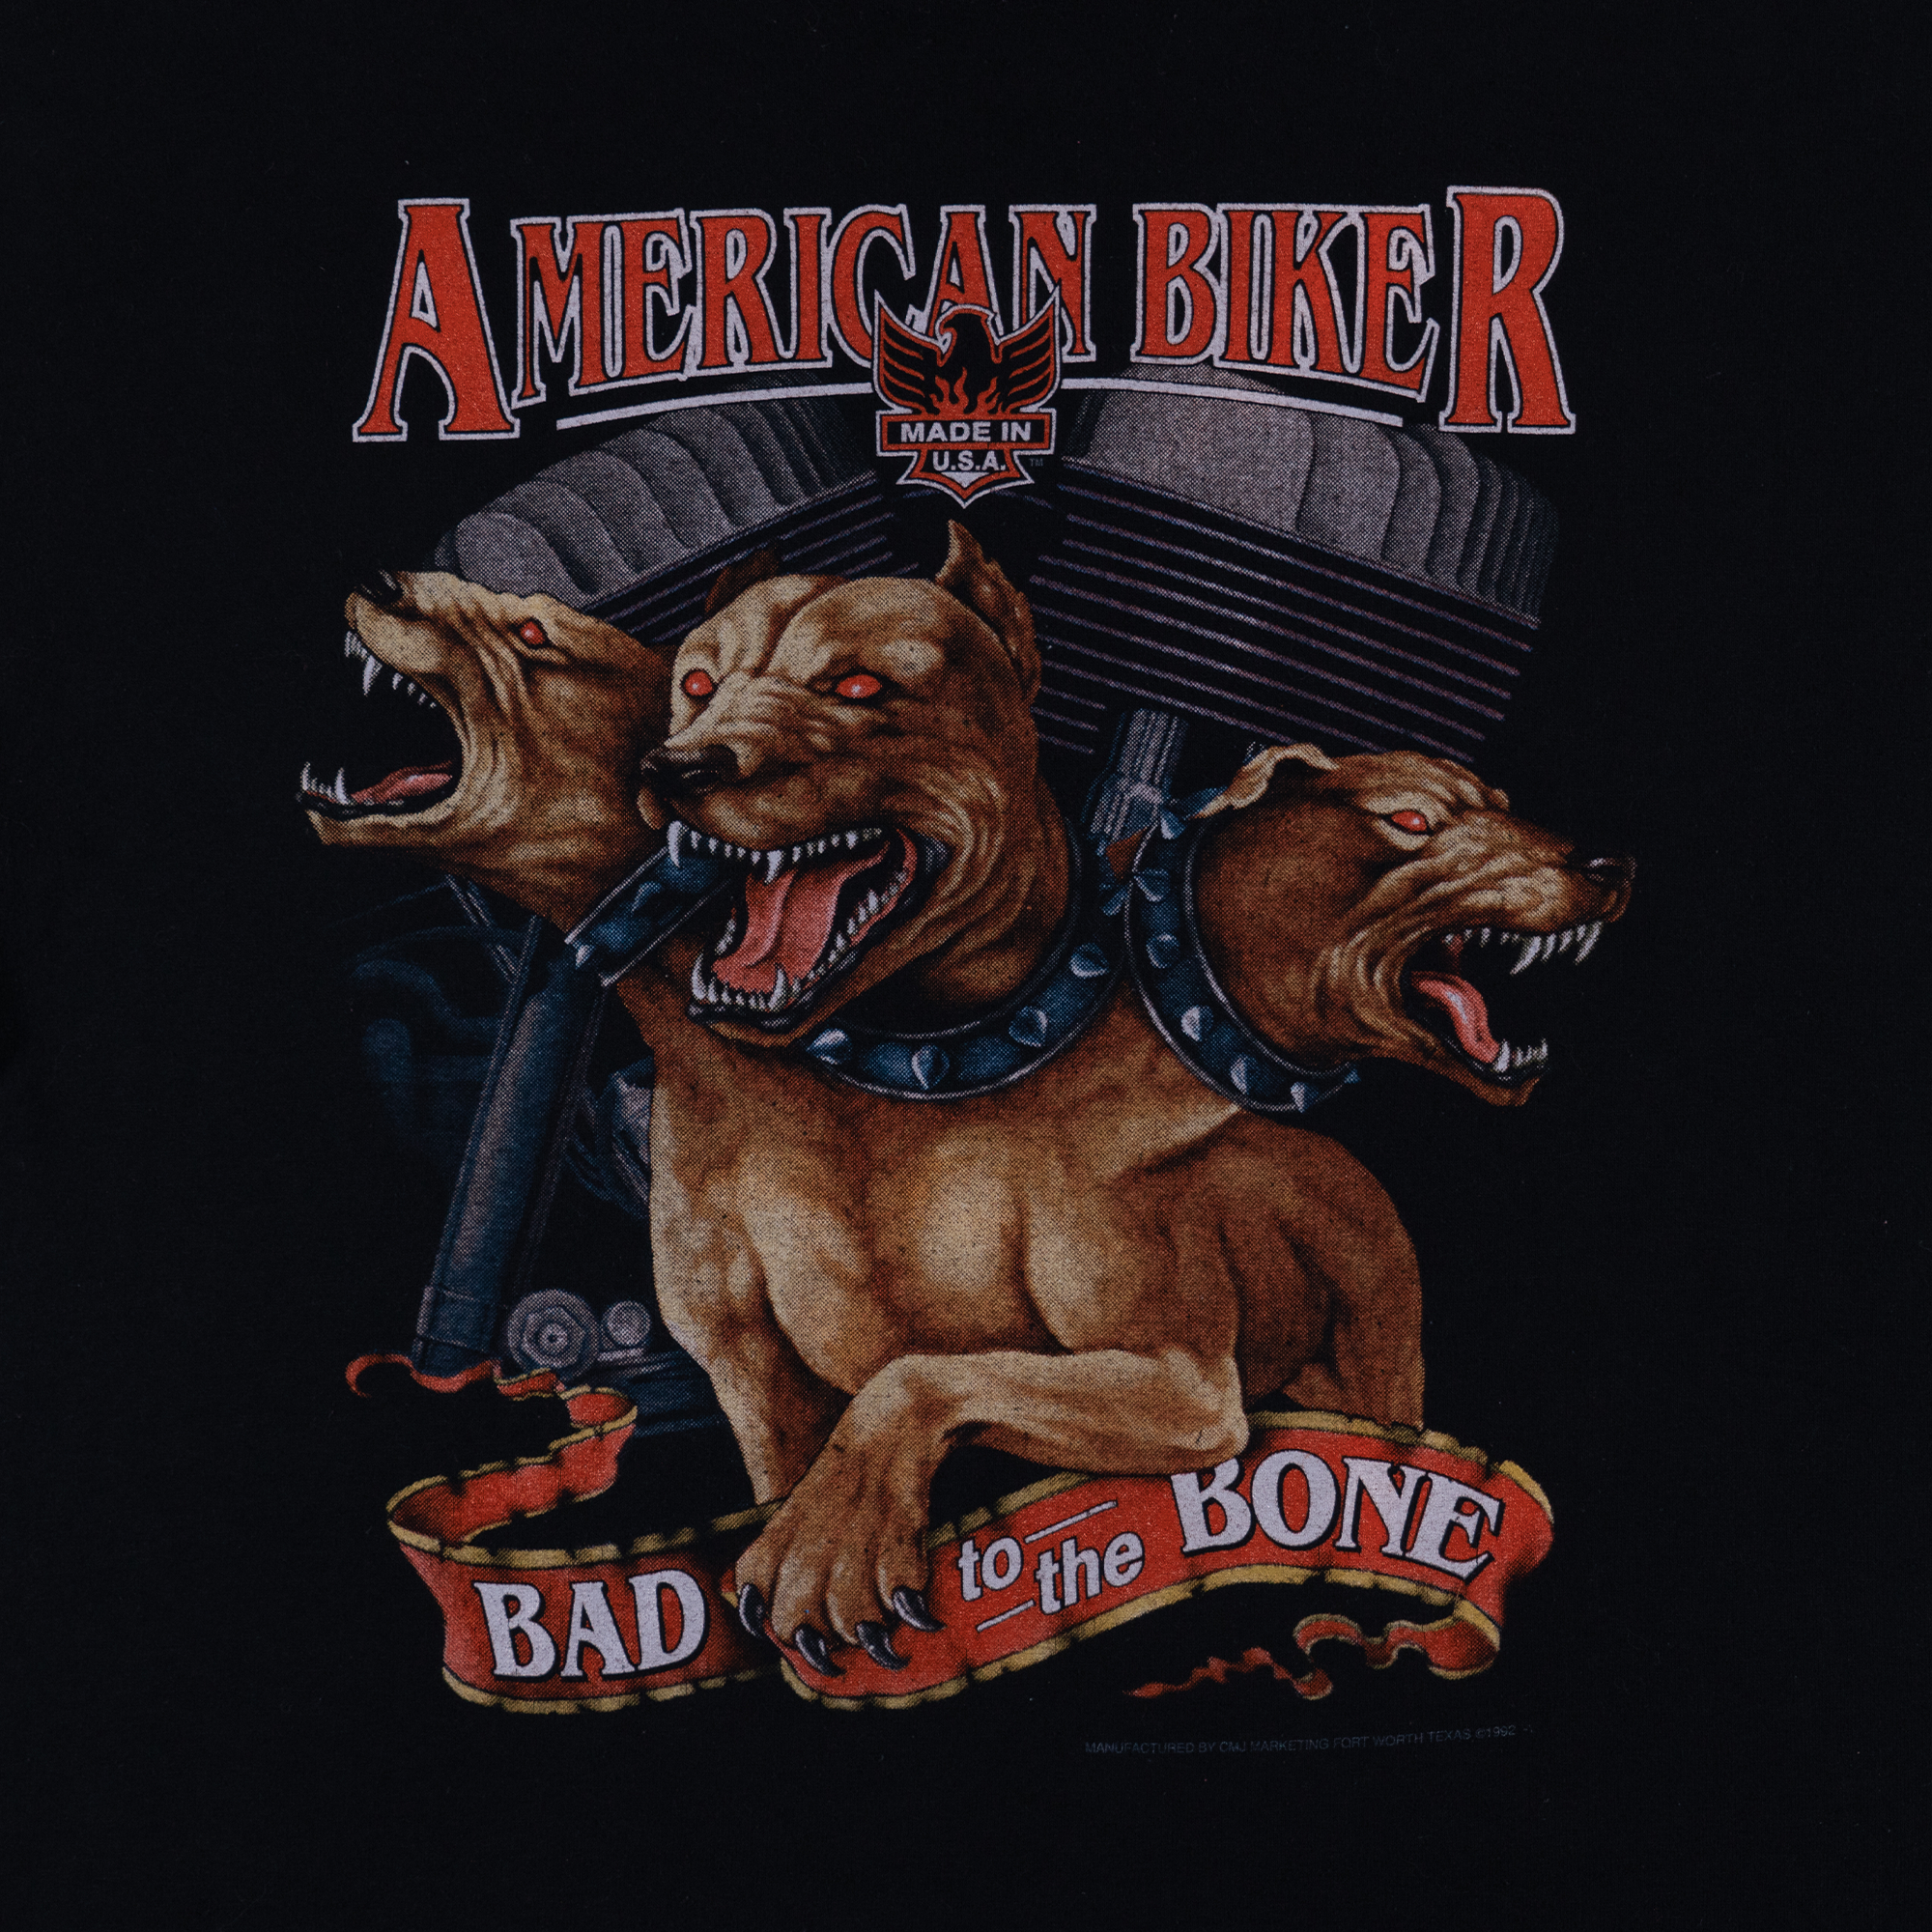 American Biker Bad To The Bone Dogs 3D Emblem 1993 Tee Black-PLUS